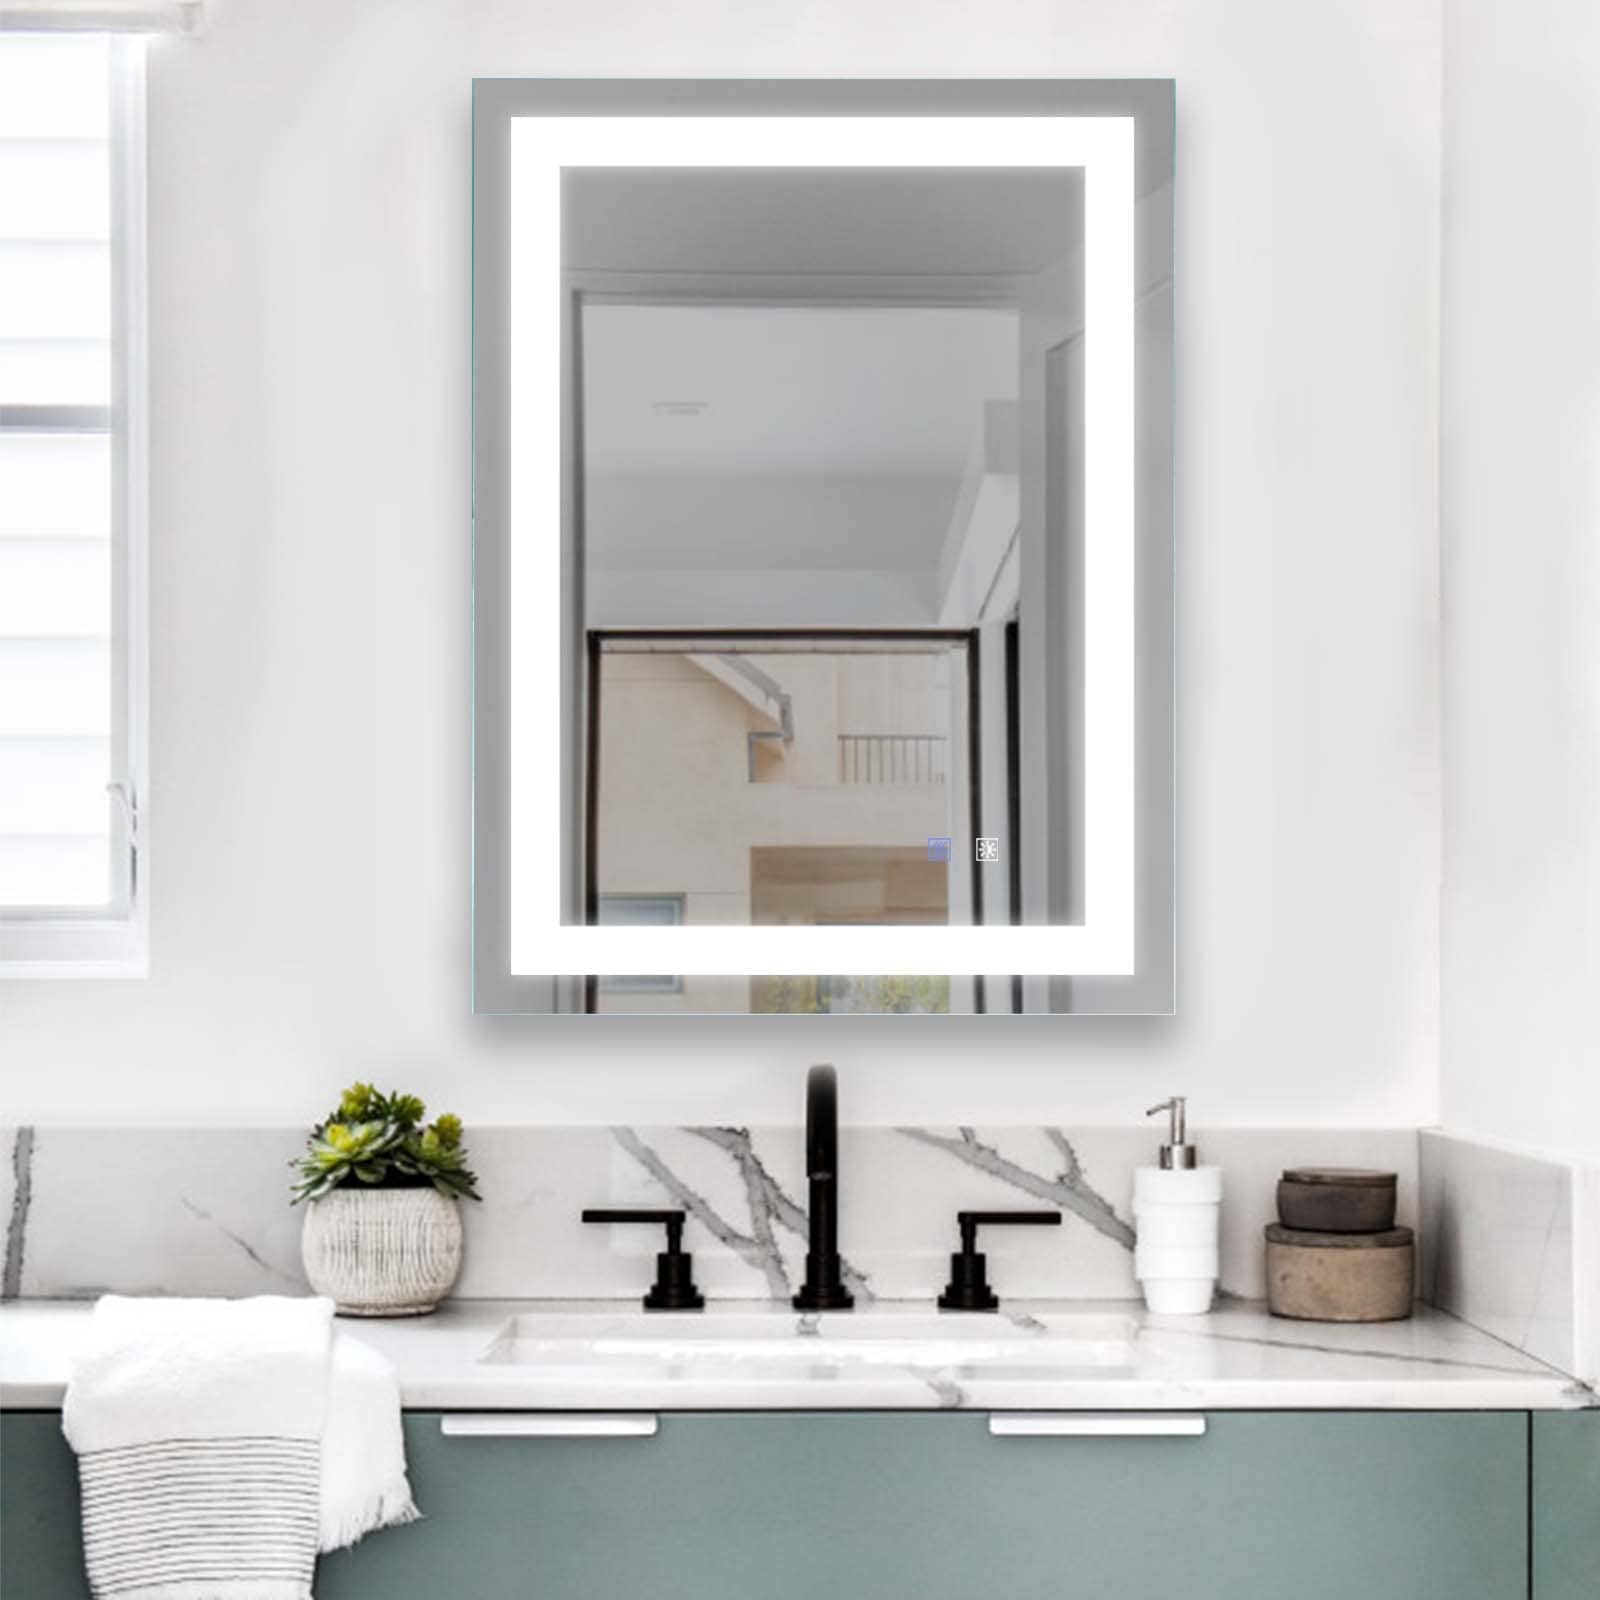 ExBrite 24 inch LED Mirror Vanity Round Mirrors Bathroom Anti-Fog Mirror